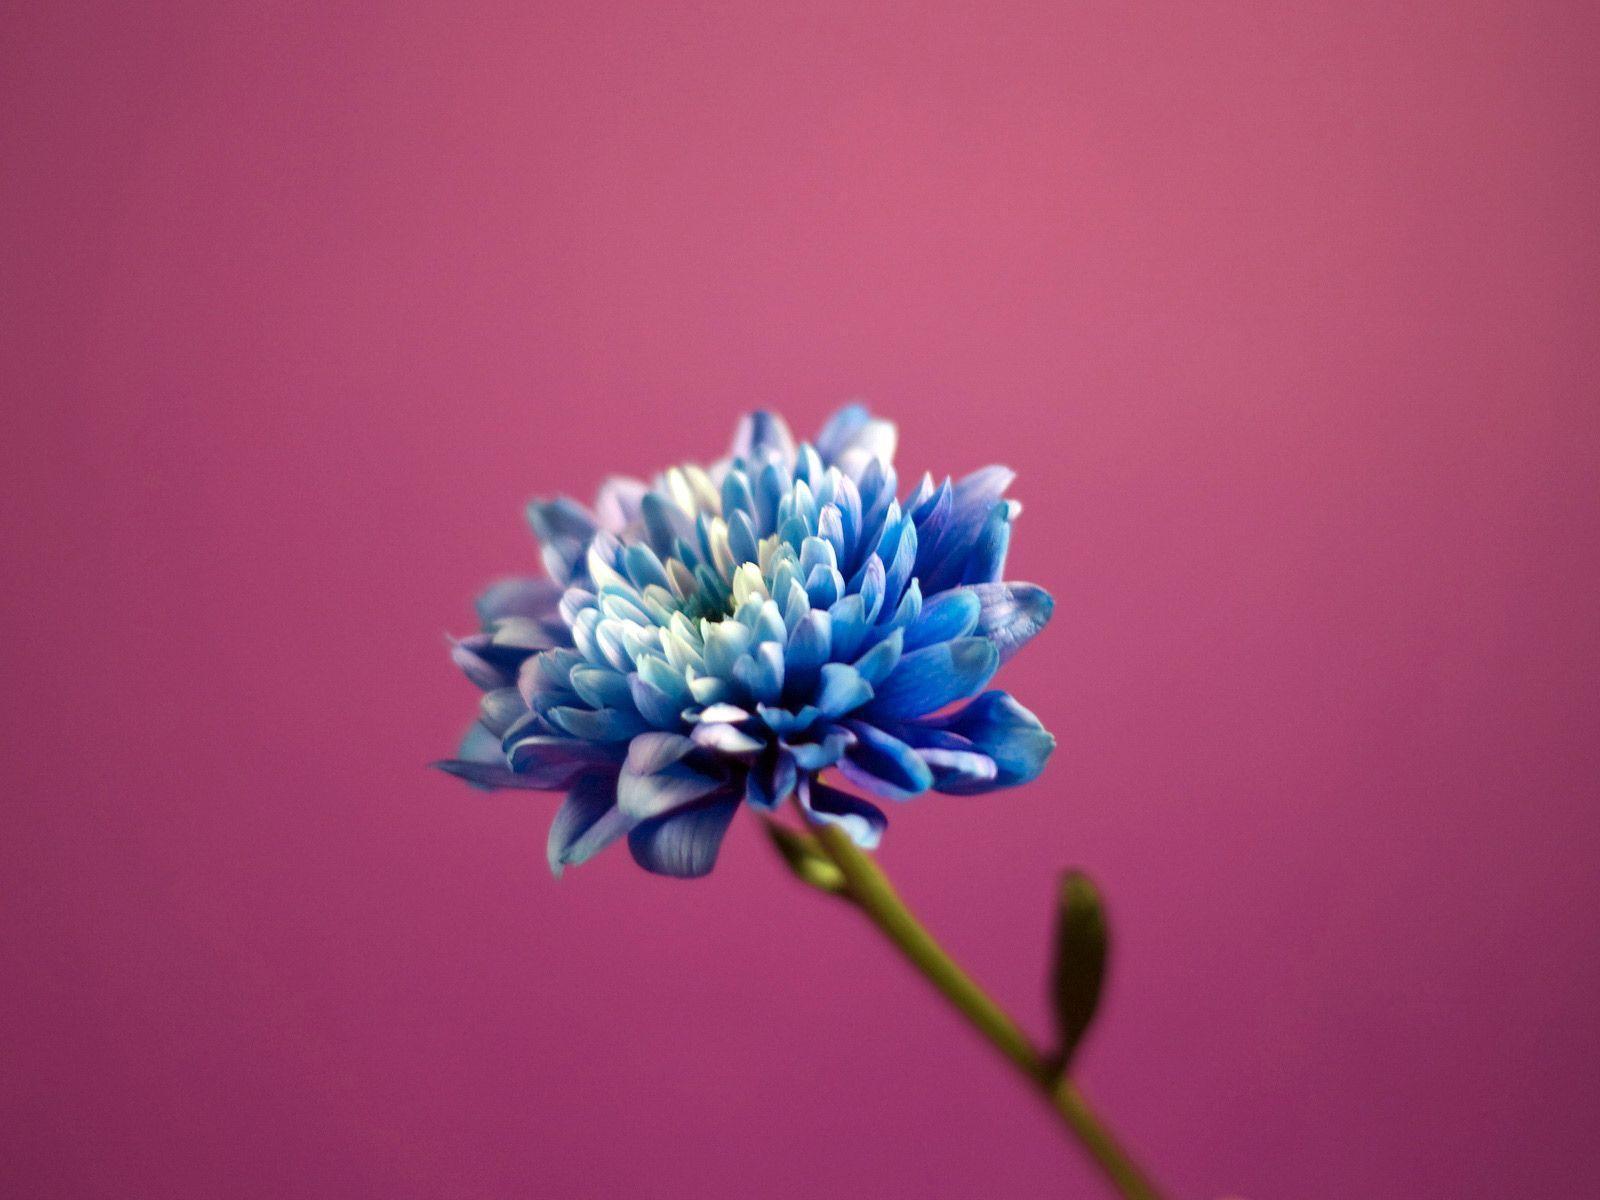 Desktop Wallpaper · Gallery · Computers · Blue Dahlia Flower